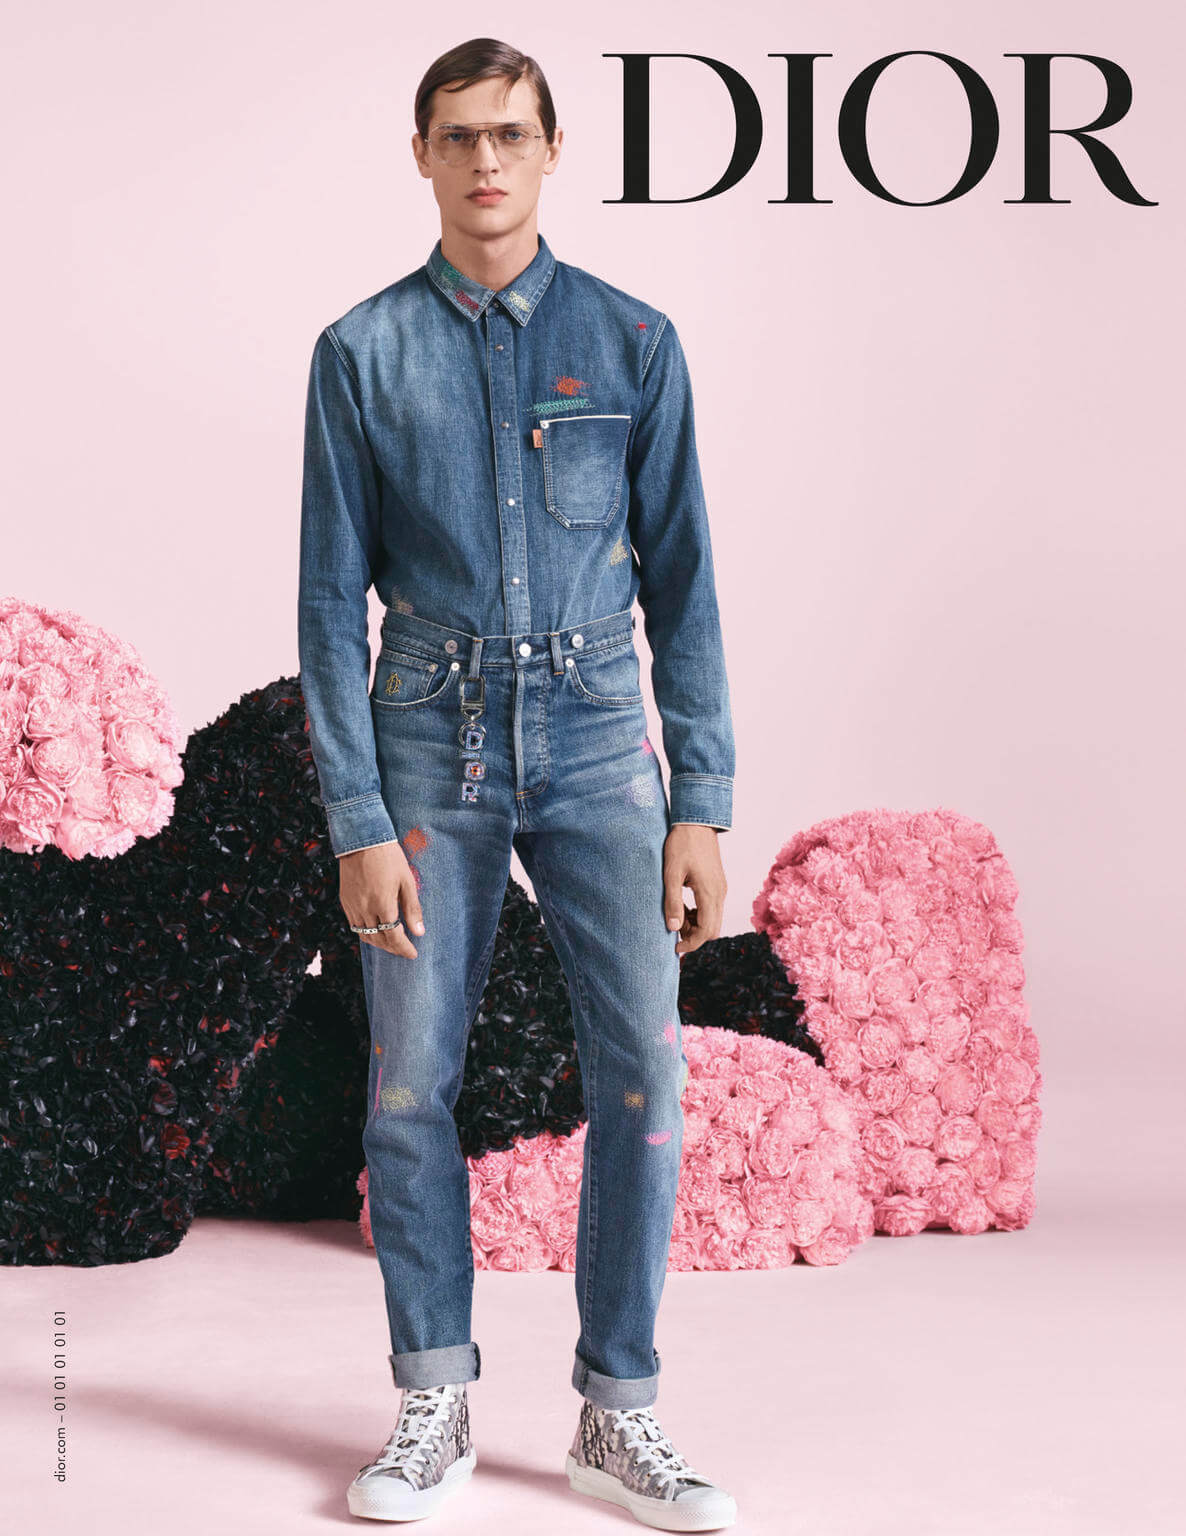 Dior Denim Collection - Art Partner